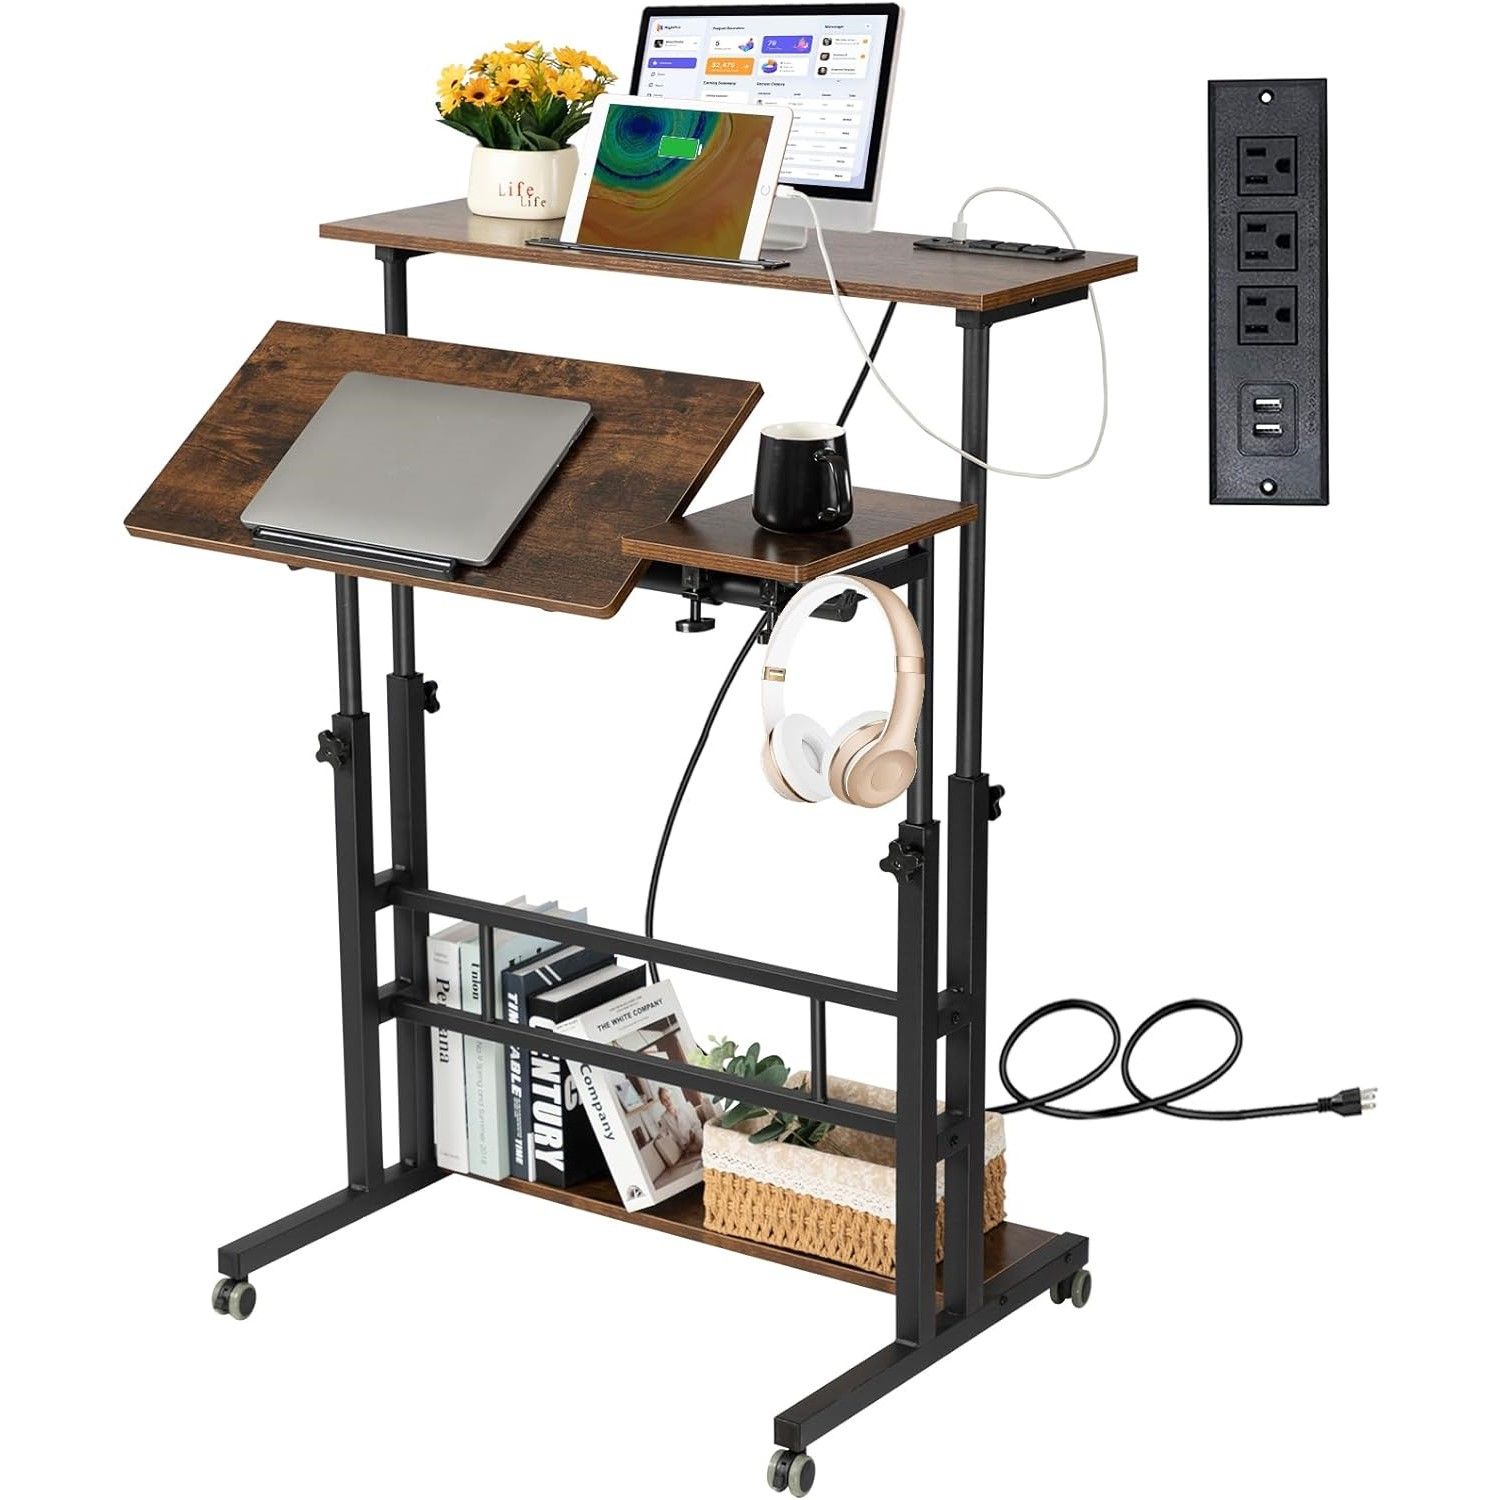 Hadulcet Mobile Standing Desk